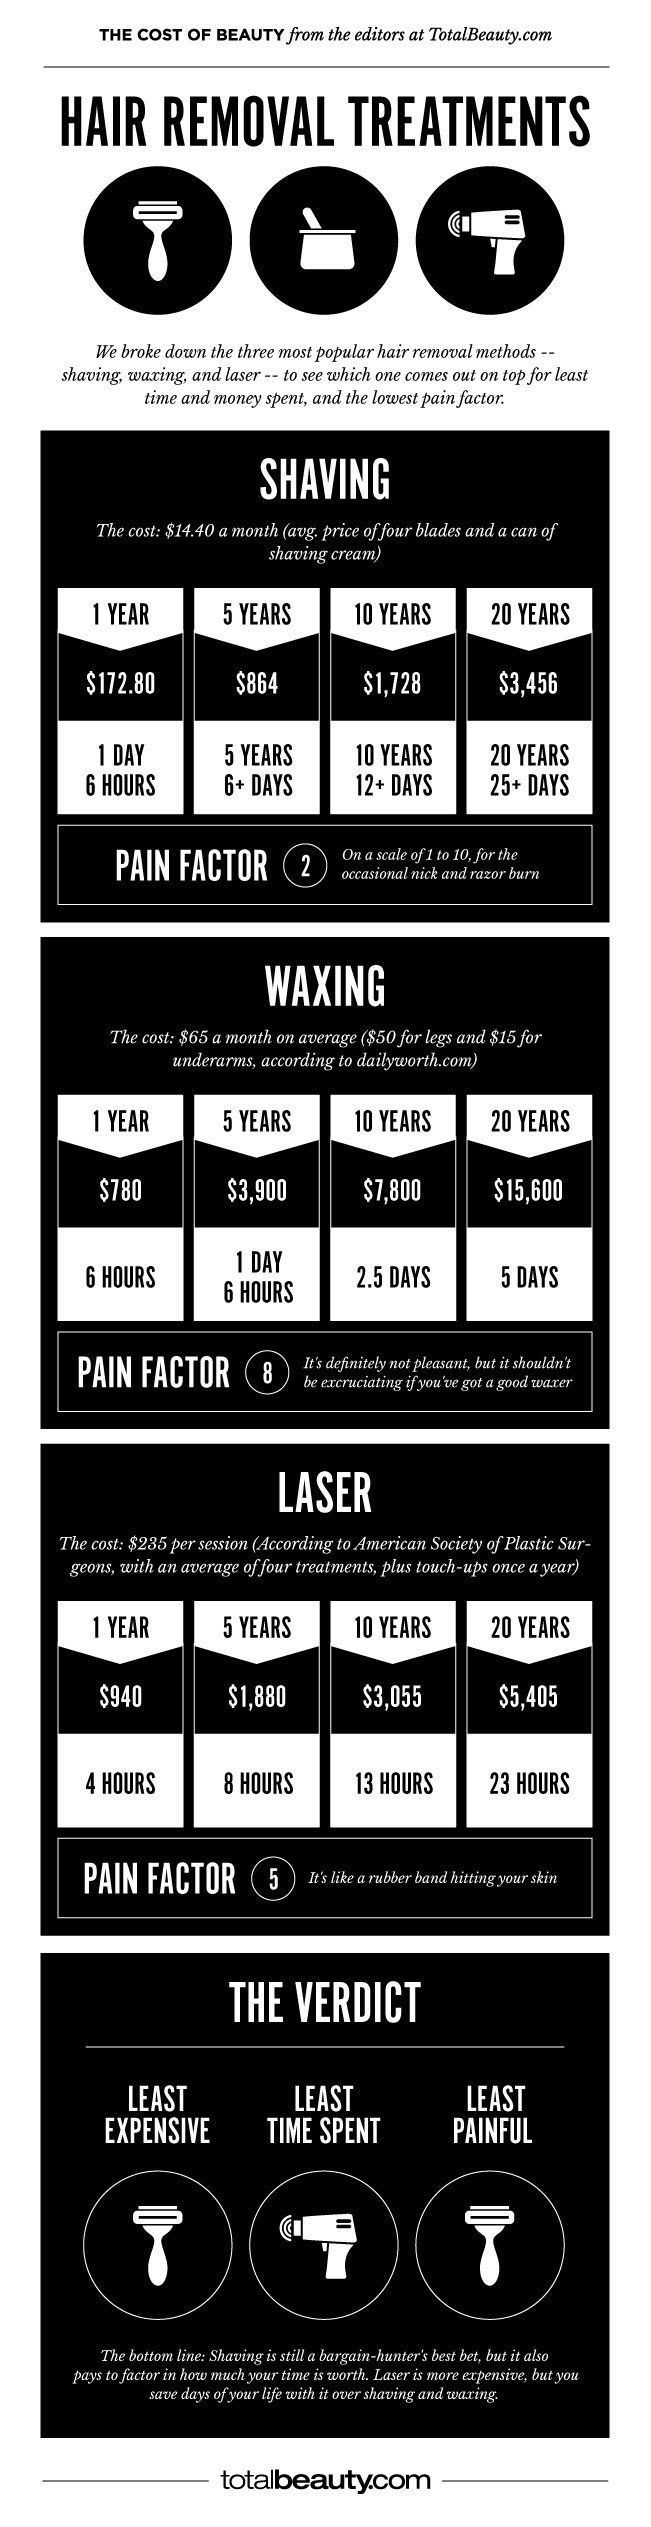 Laser hair removal vs waxing bikini